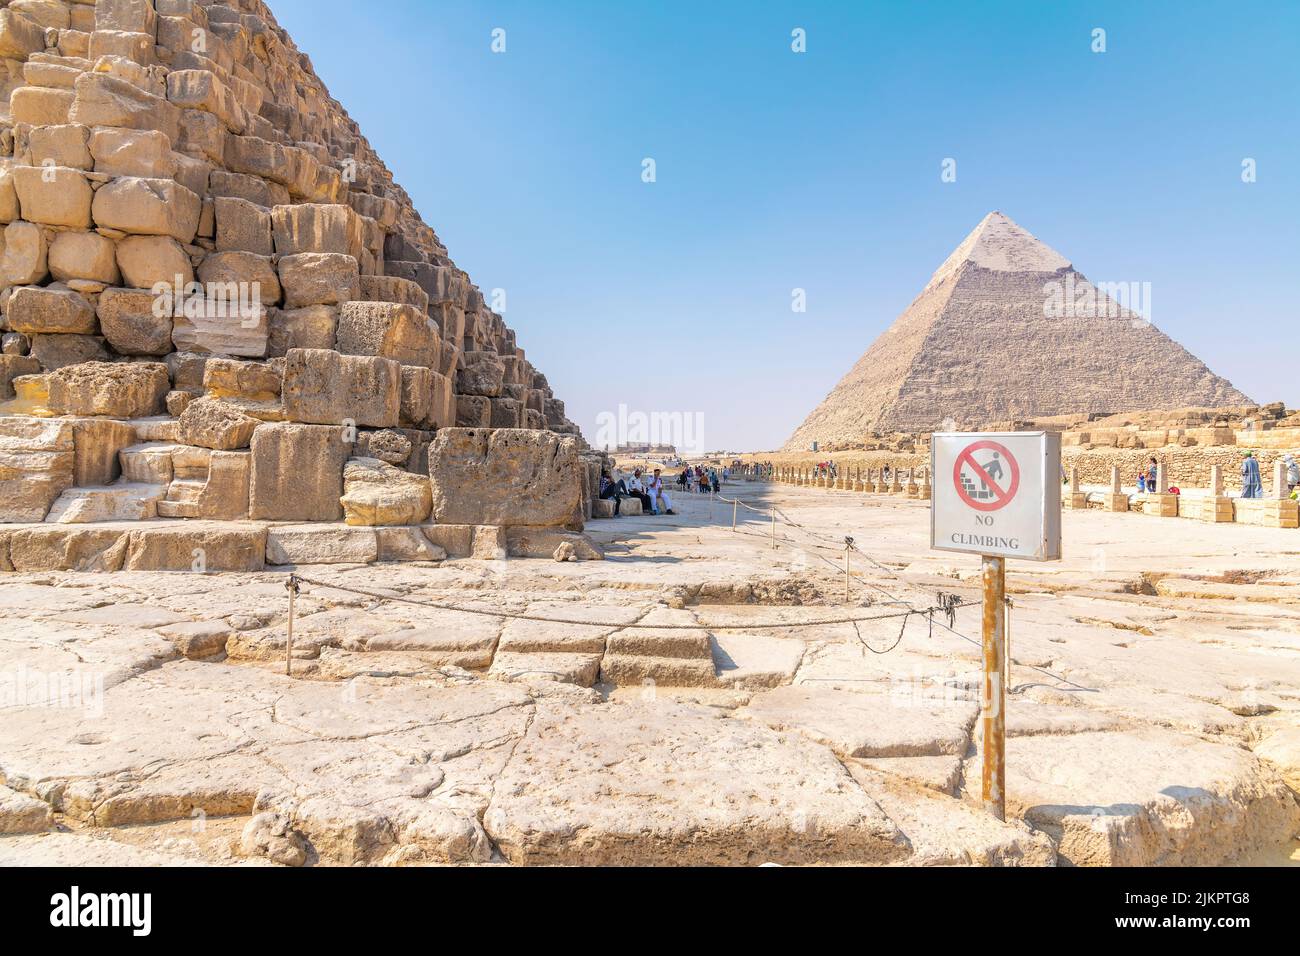 Giza, Egypt; July 29, 2022 - A view of the pyramids at Giza, Egypt Stock Photo